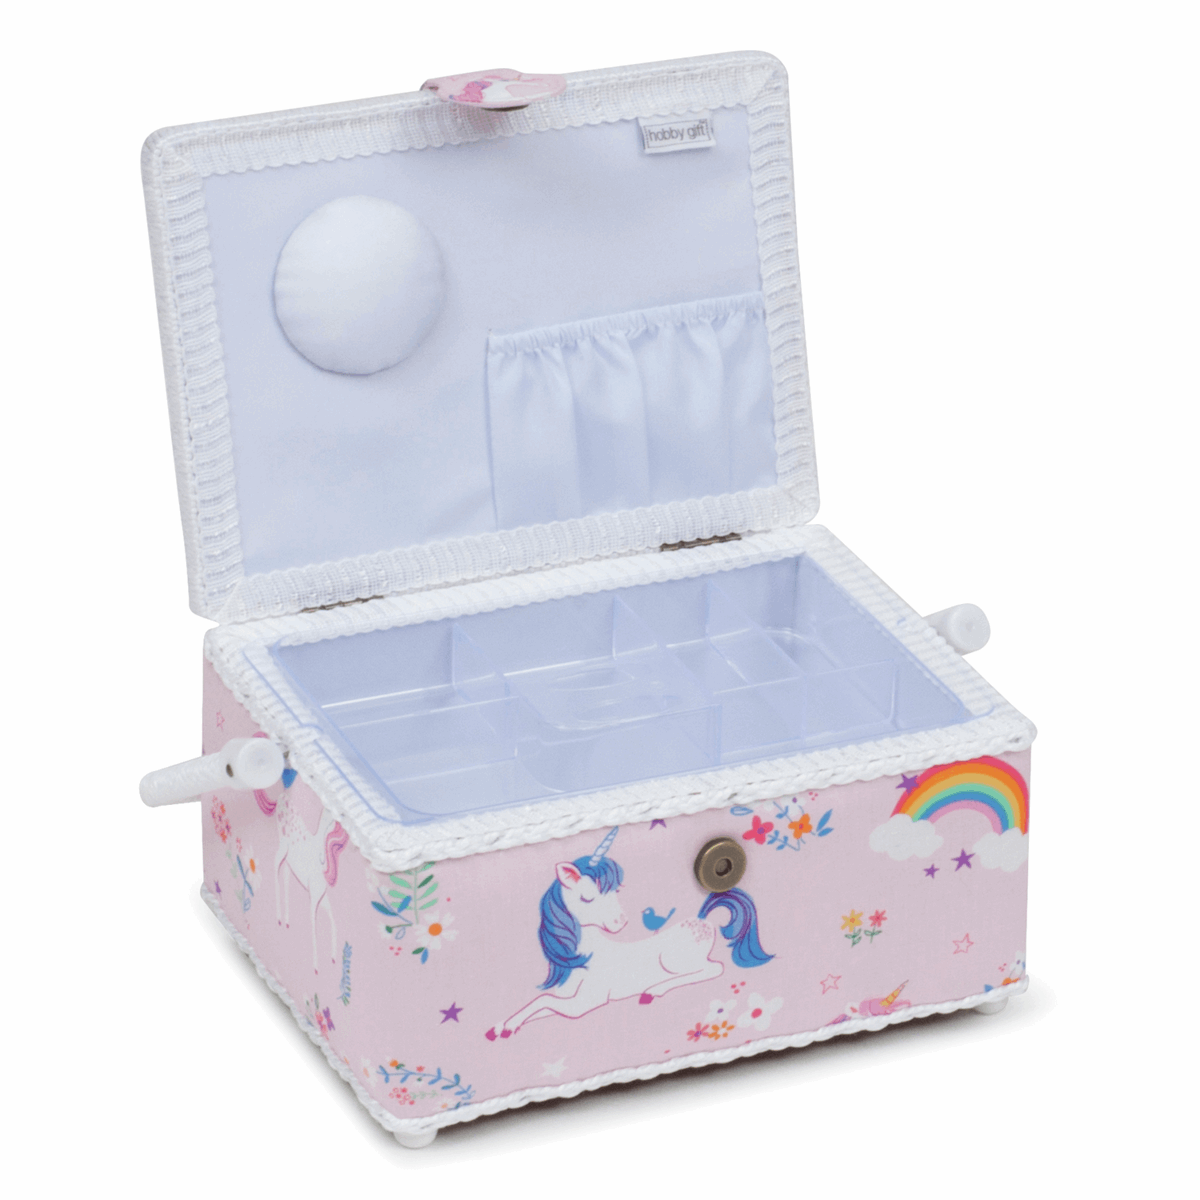 Unicorn Sewing Box - Medium